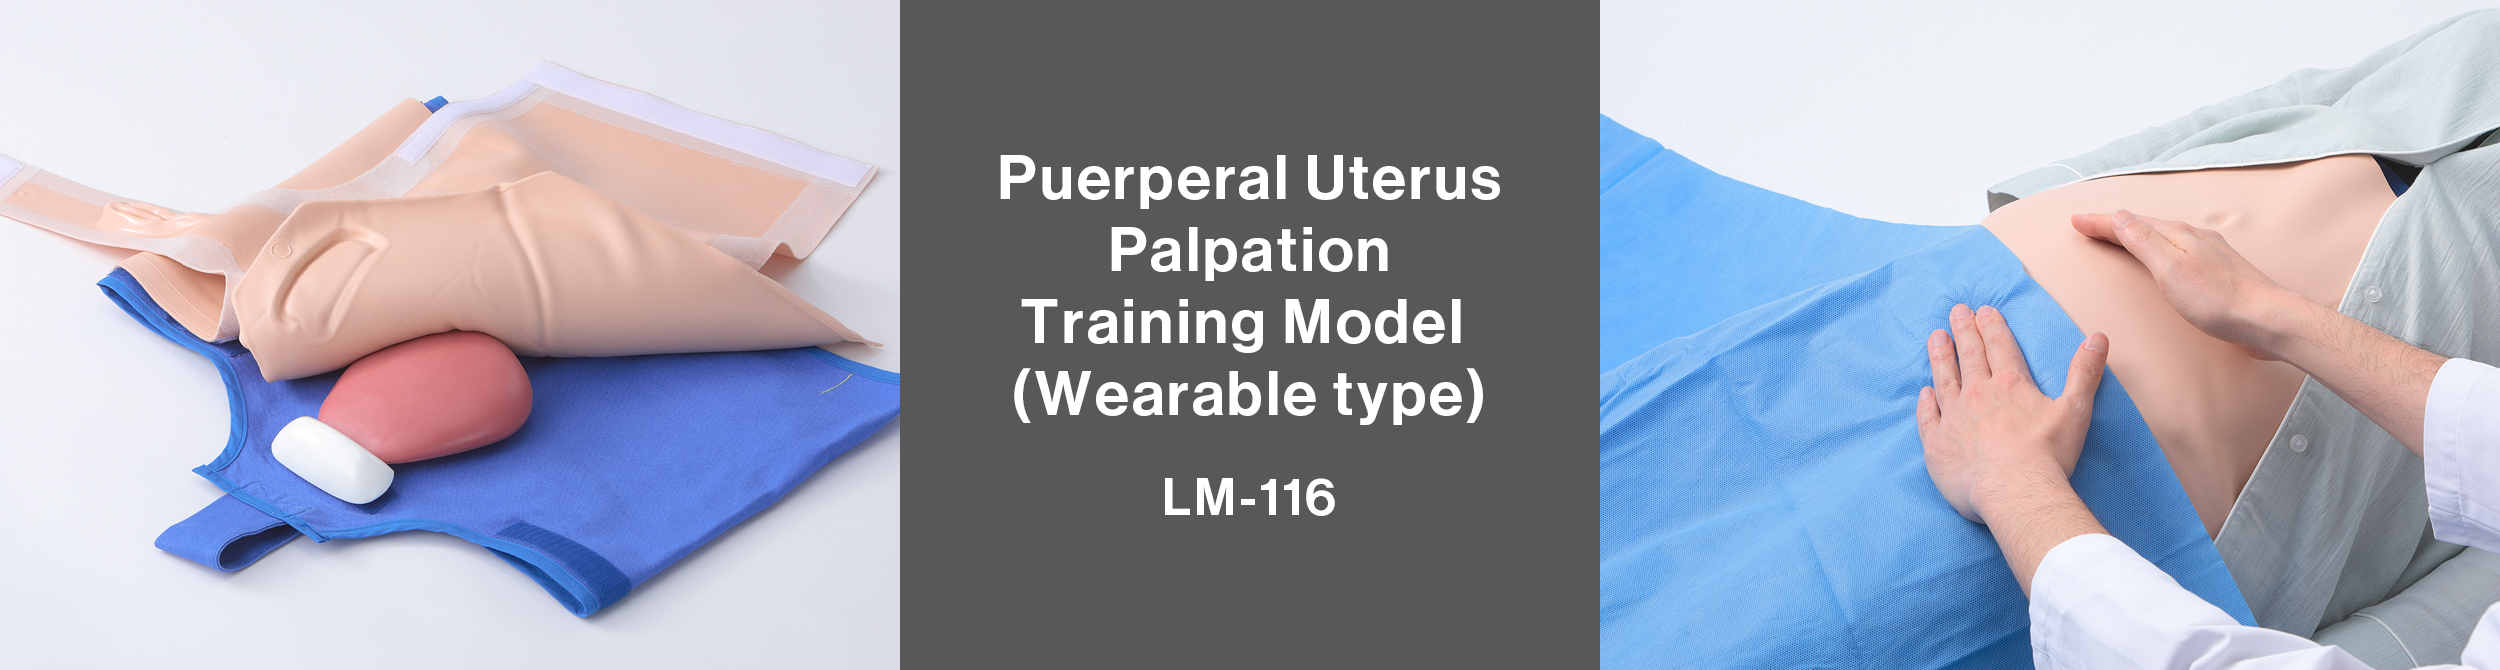 Puerperal Uterus Palpation Training Model (Wearable type)